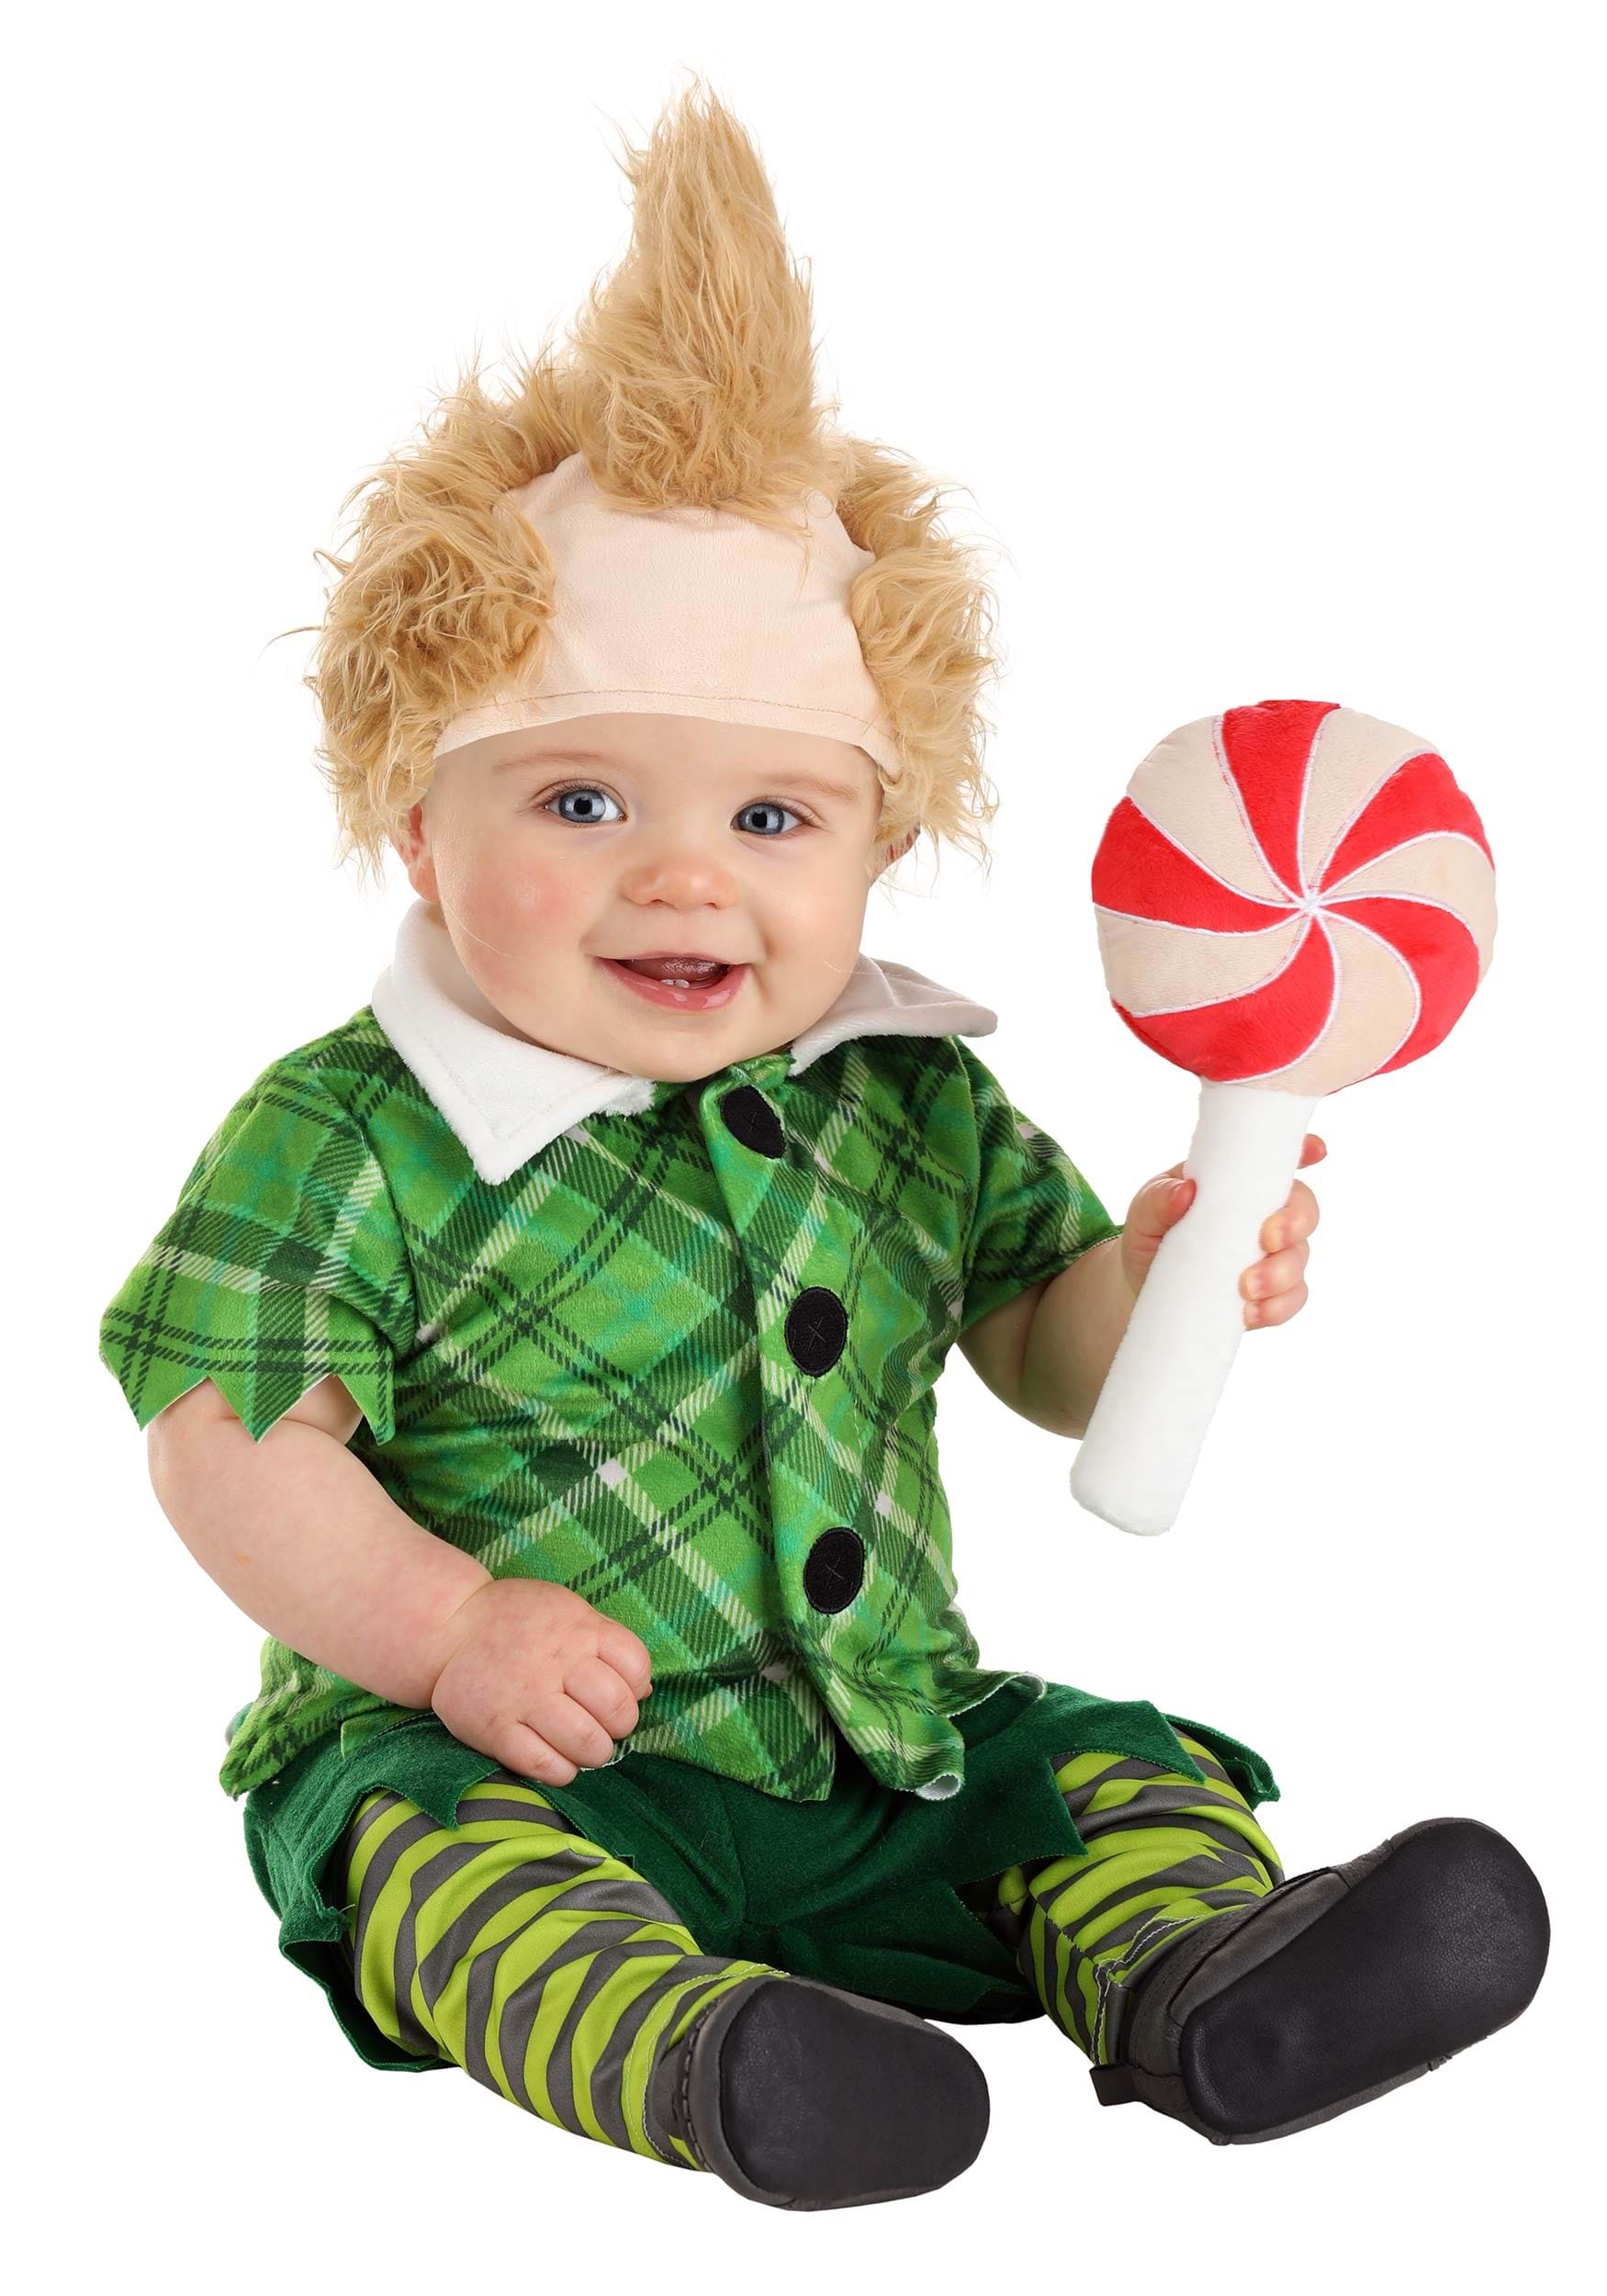 Sweet Munchkin Infant Costume